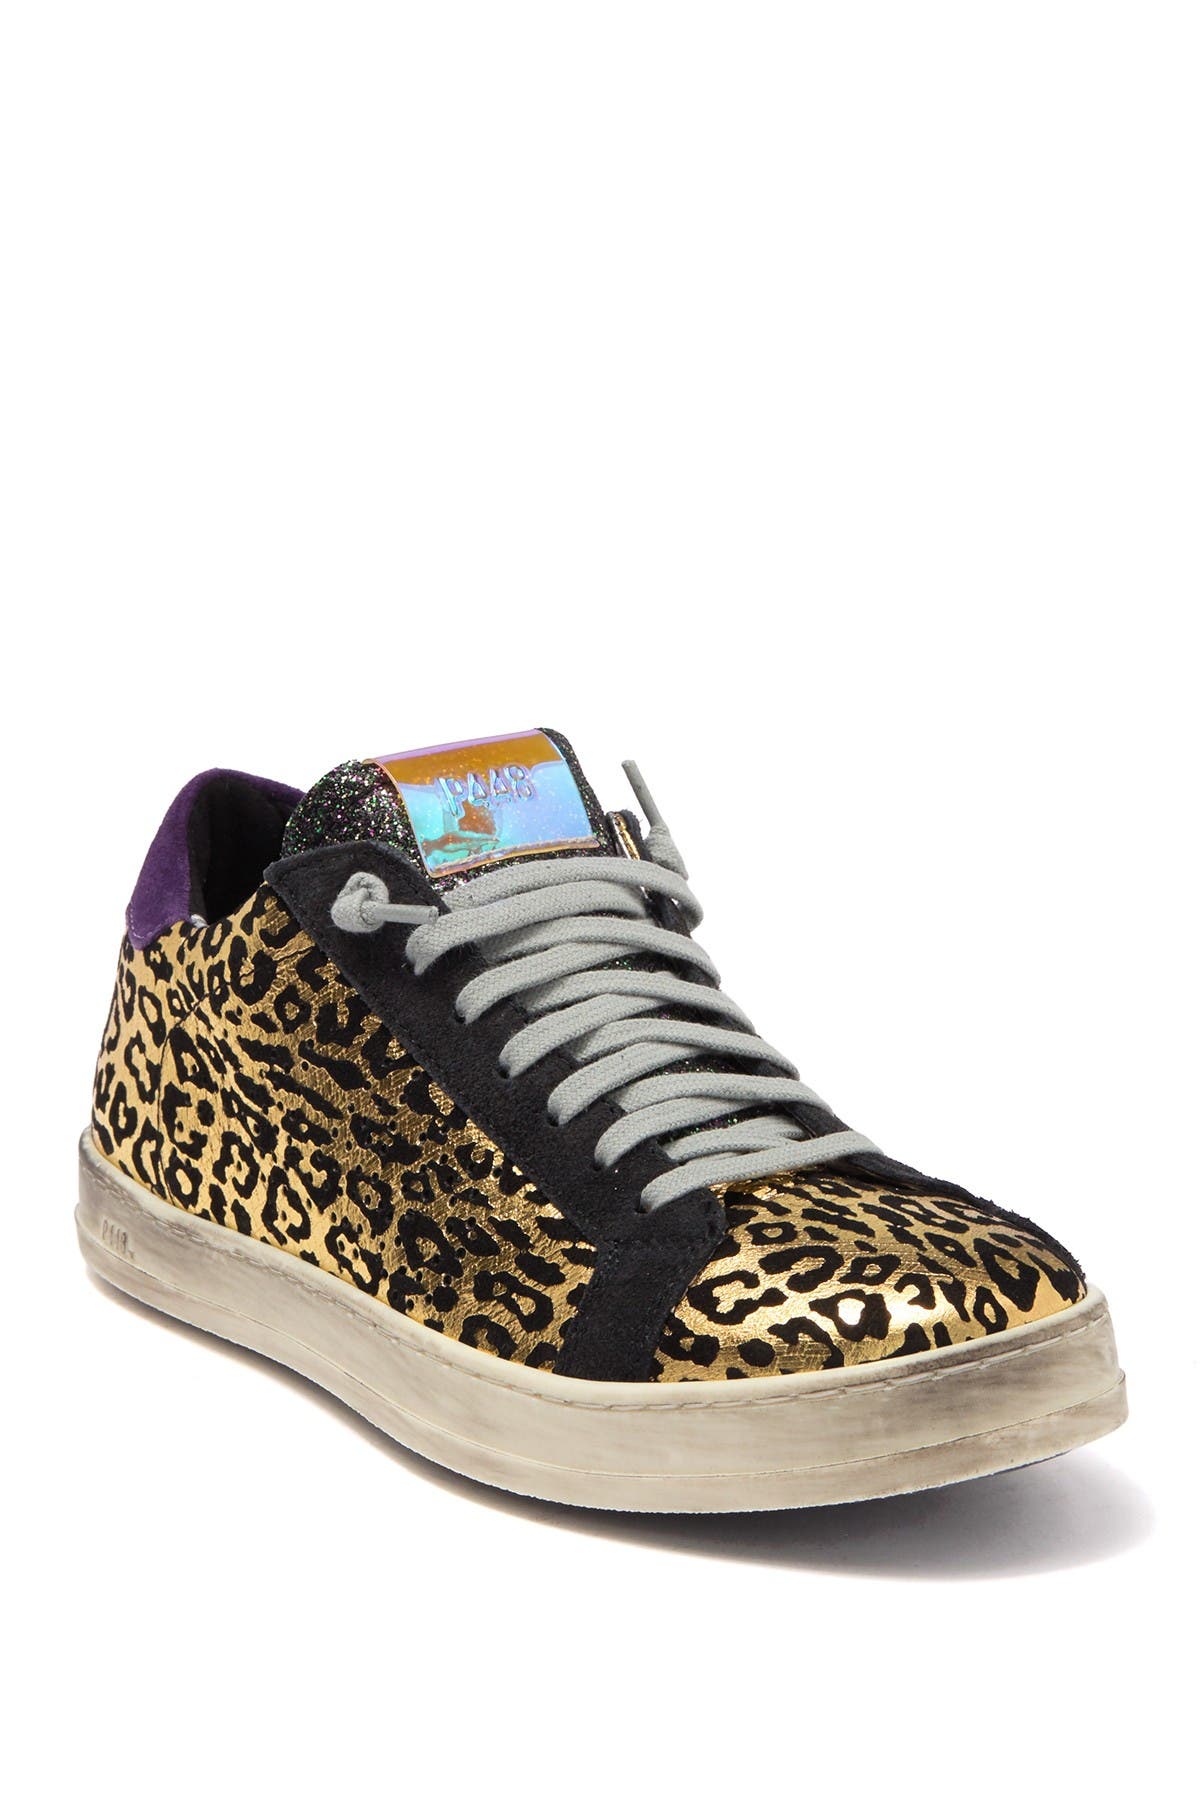 P448 | John Leopard Print Sneaker 